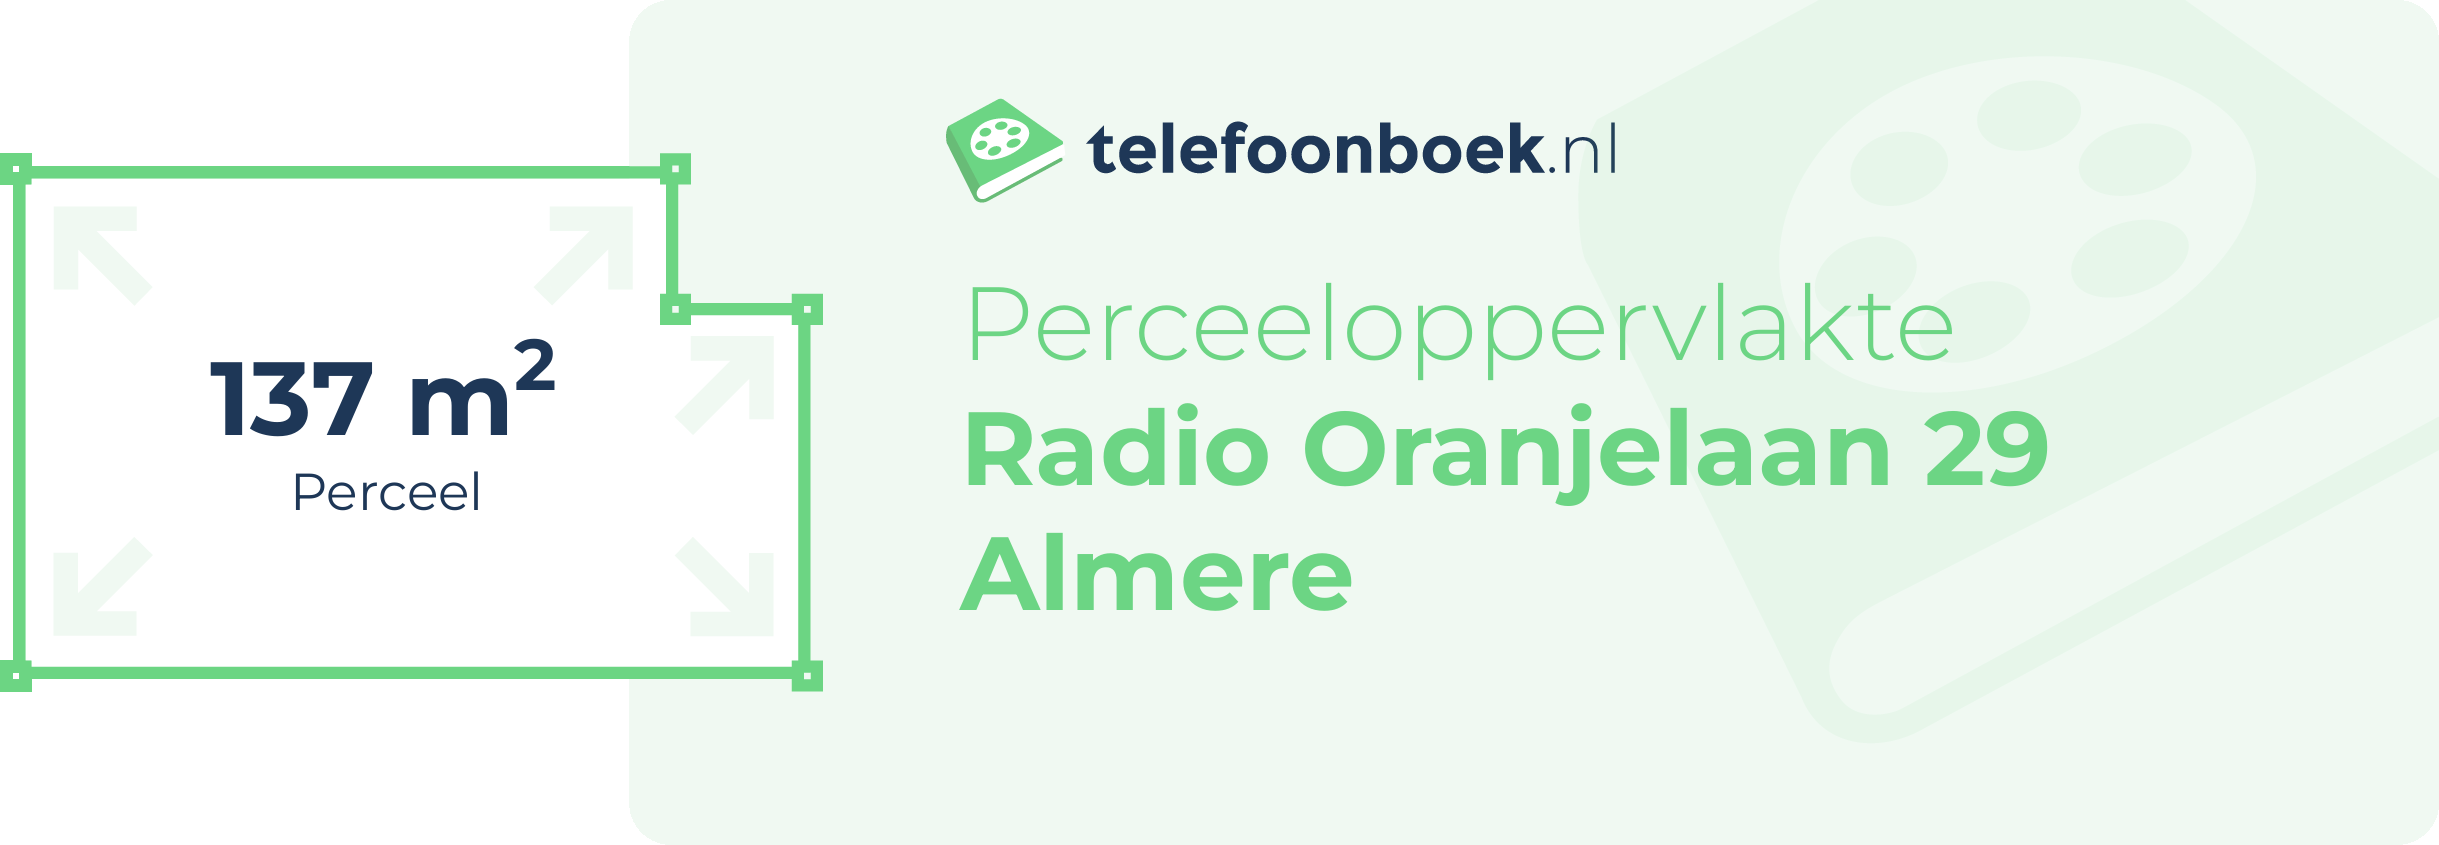 Perceeloppervlakte Radio Oranjelaan 29 Almere